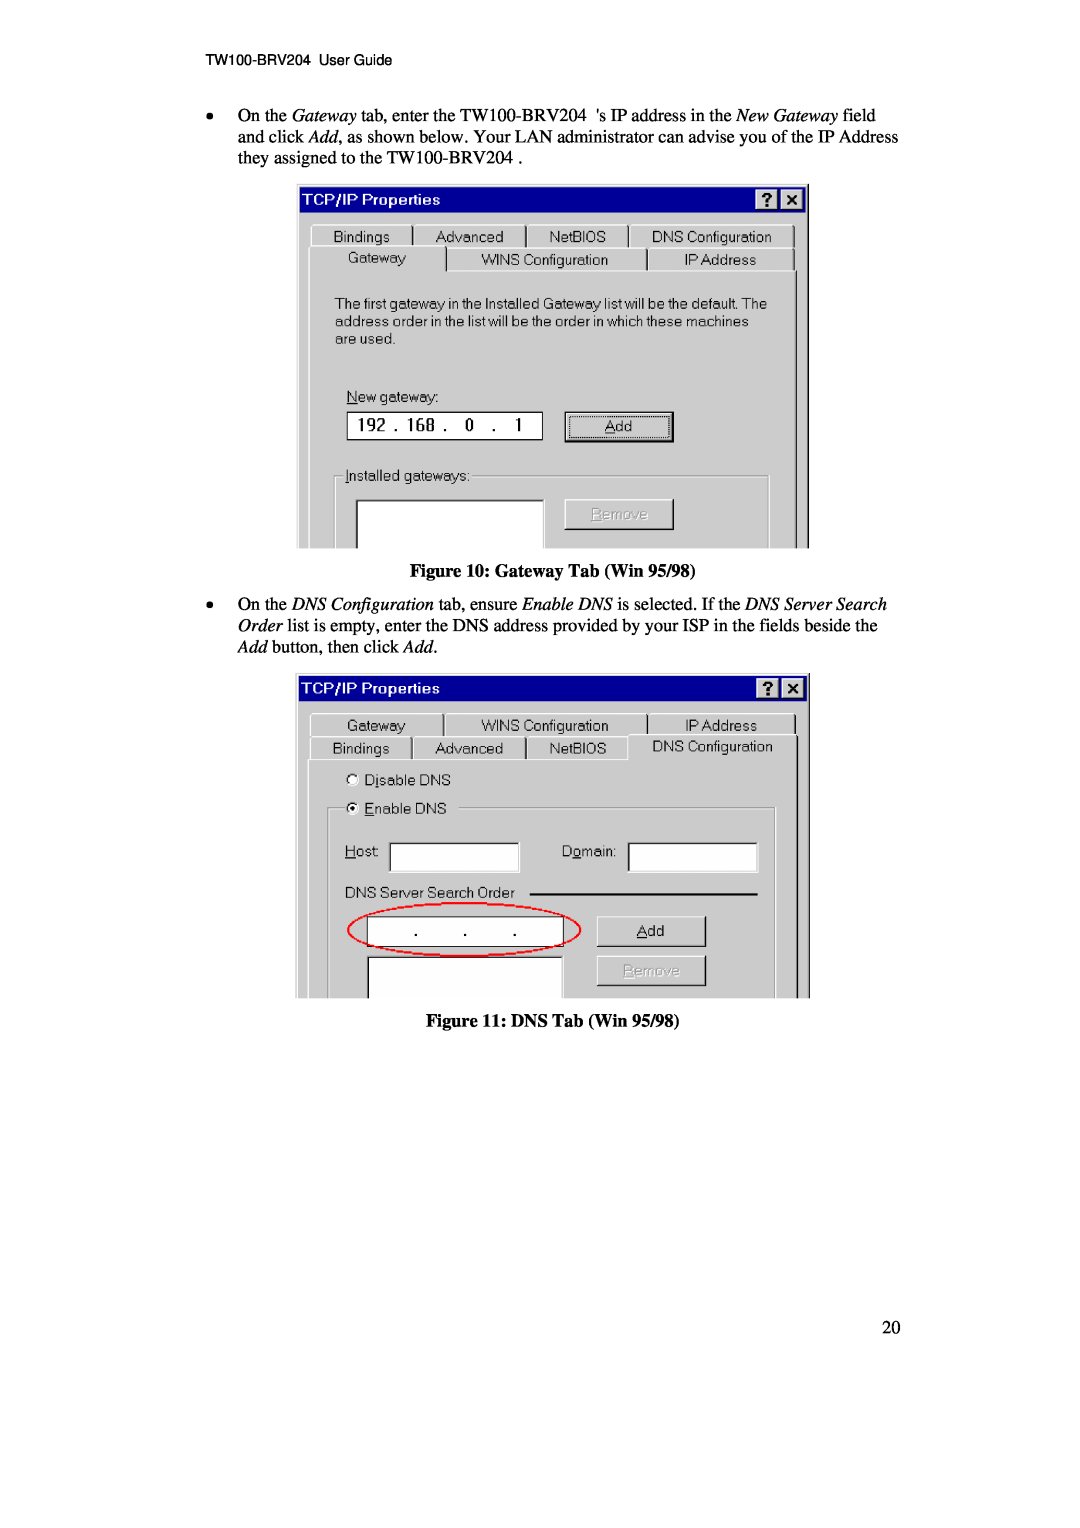 TRENDnet manual Gateway Tab Win 95/98, DNS Tab Win 95/98, TW100-BRV204 User Guide 